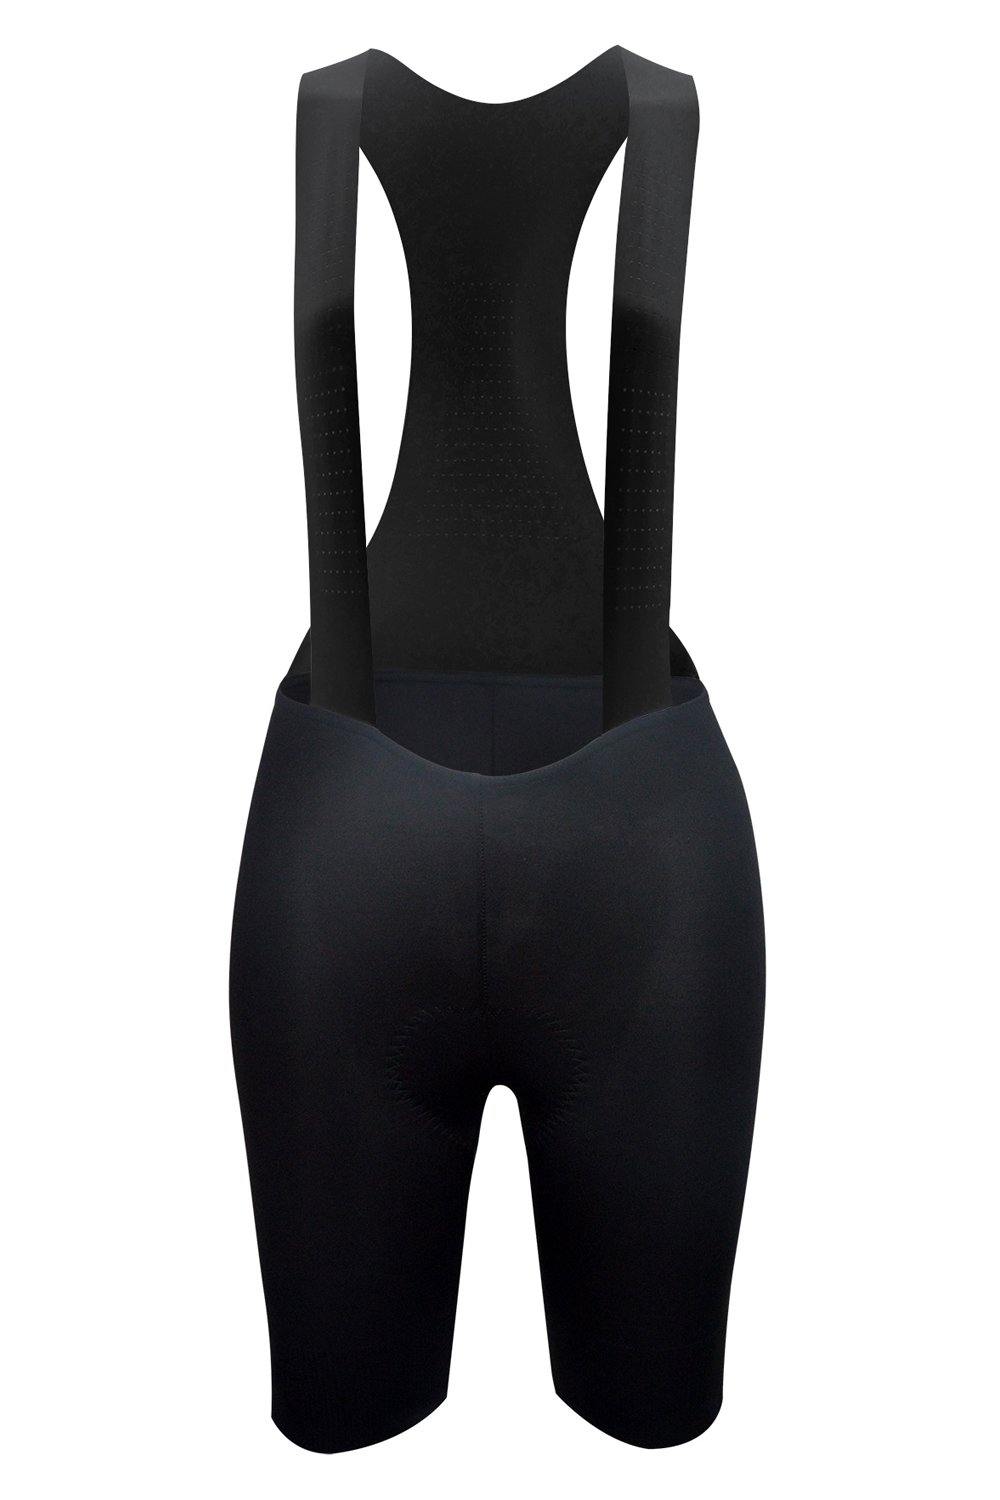 Sundried Stealth Women's Bib Shorts Bib Shorts S Black SD0298 S Black Activewear